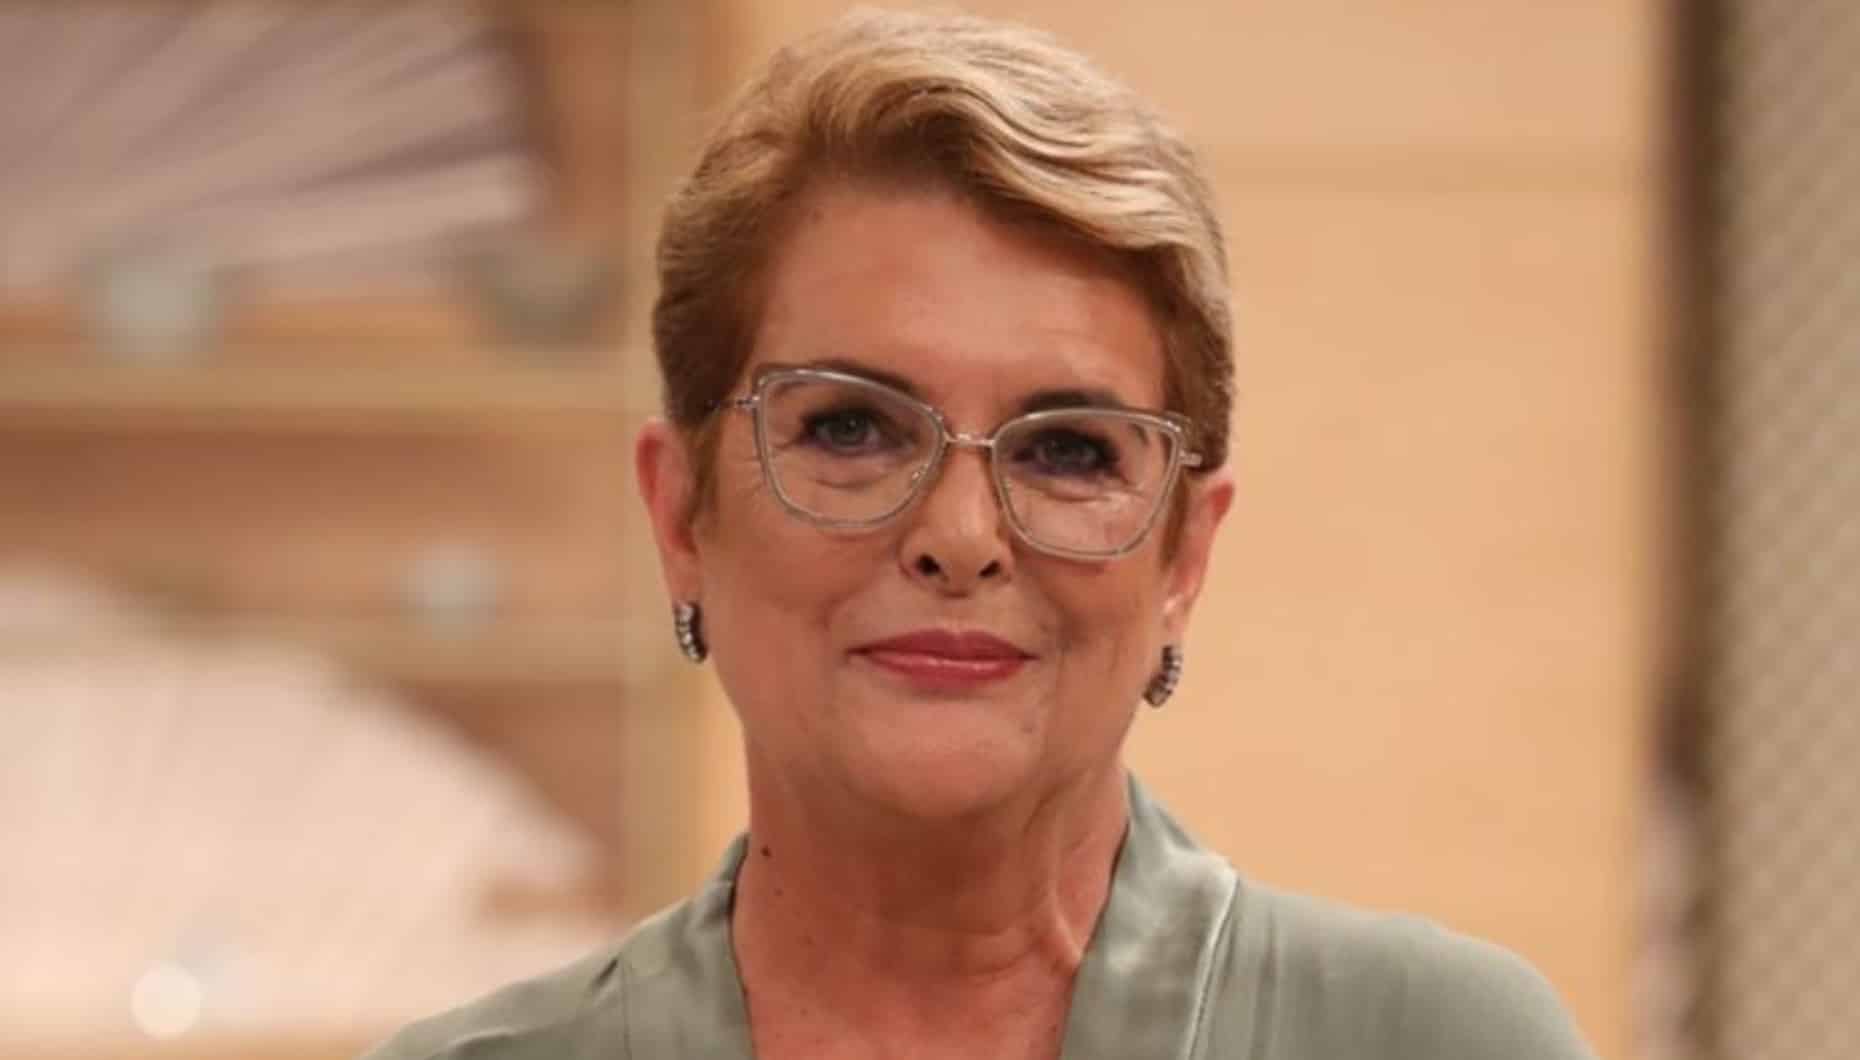 Luísa Castel-Branco